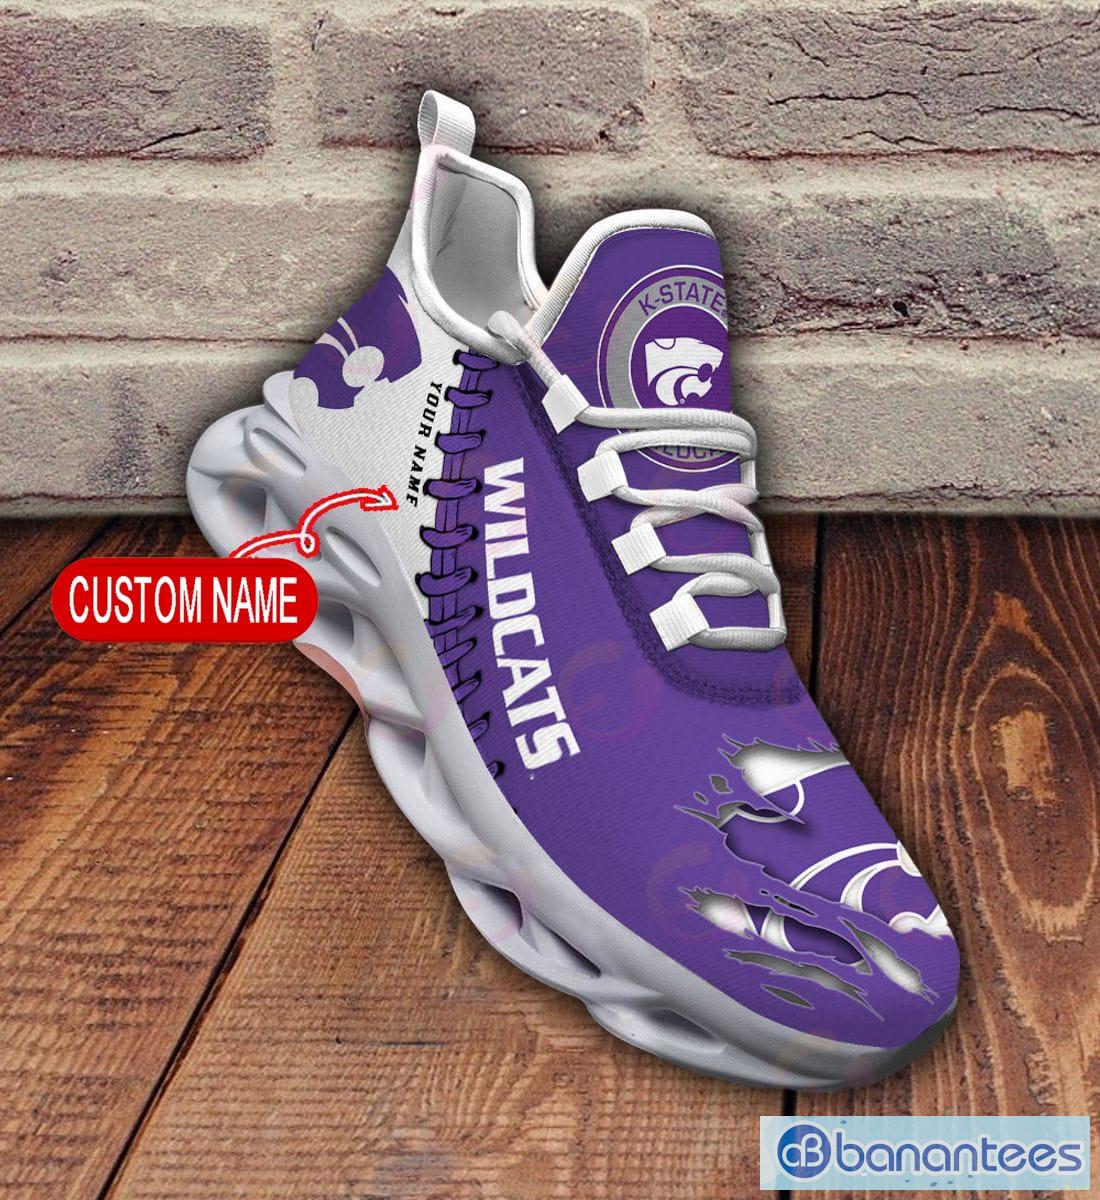 Wichita State Shockers Ncaa NMD Human Shoes - Customization Trend